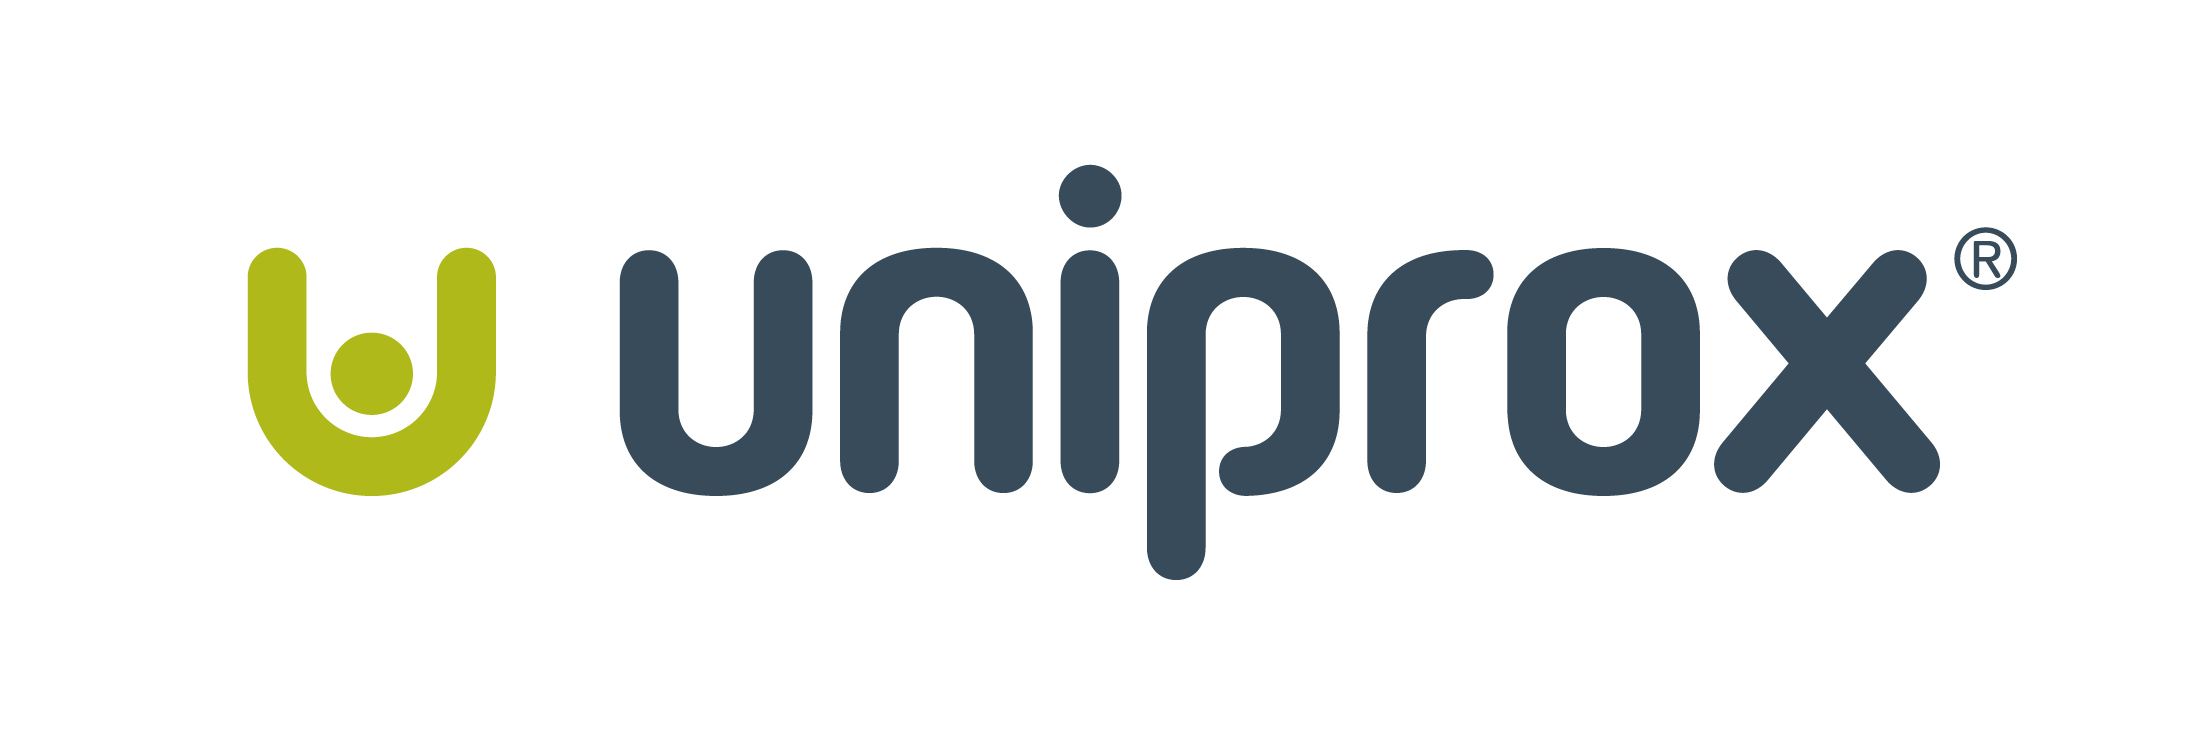 Uniprox_Logo - Partner Lentes Prothesenwerkstatt Köln